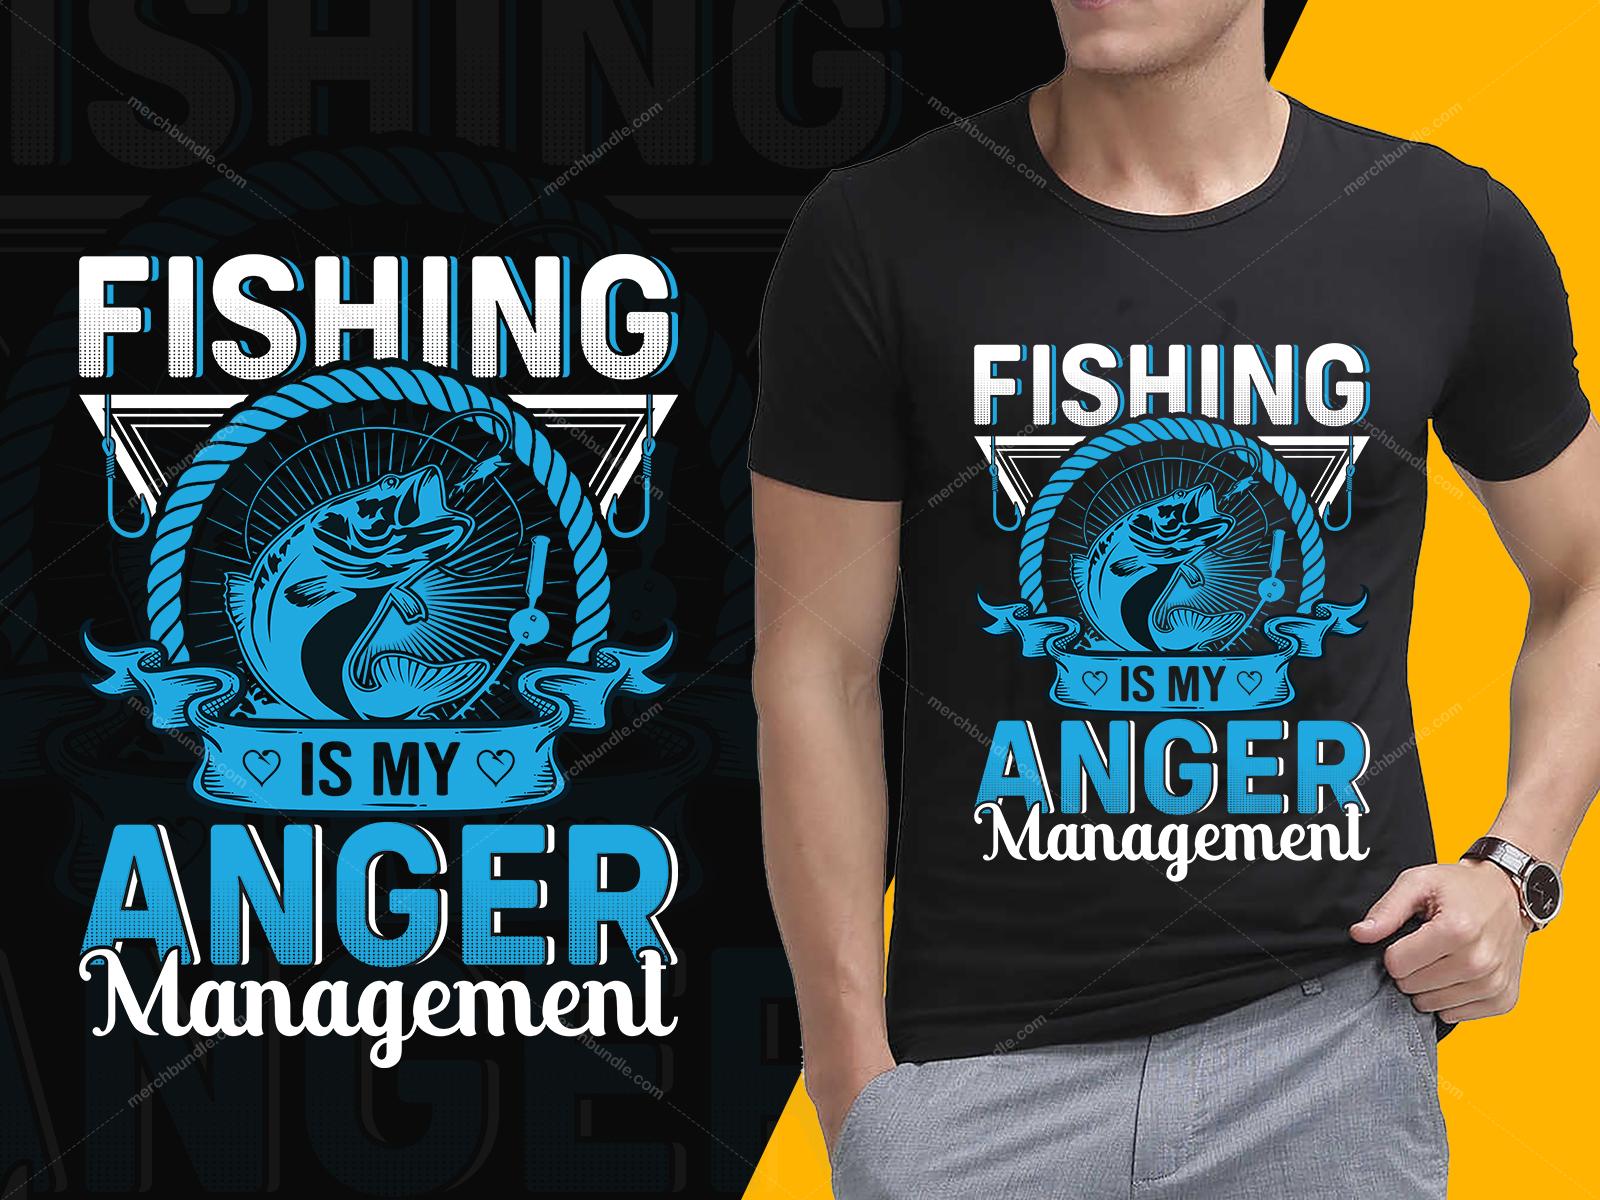 15 Fishing Shirt Designs Bundle For Commercial Use Part 4, Fishing T-shirt,  Fishing png file, Fishing digital file, Fishing gift, Fishing download,  Fishing design - Buy t-shirt designs